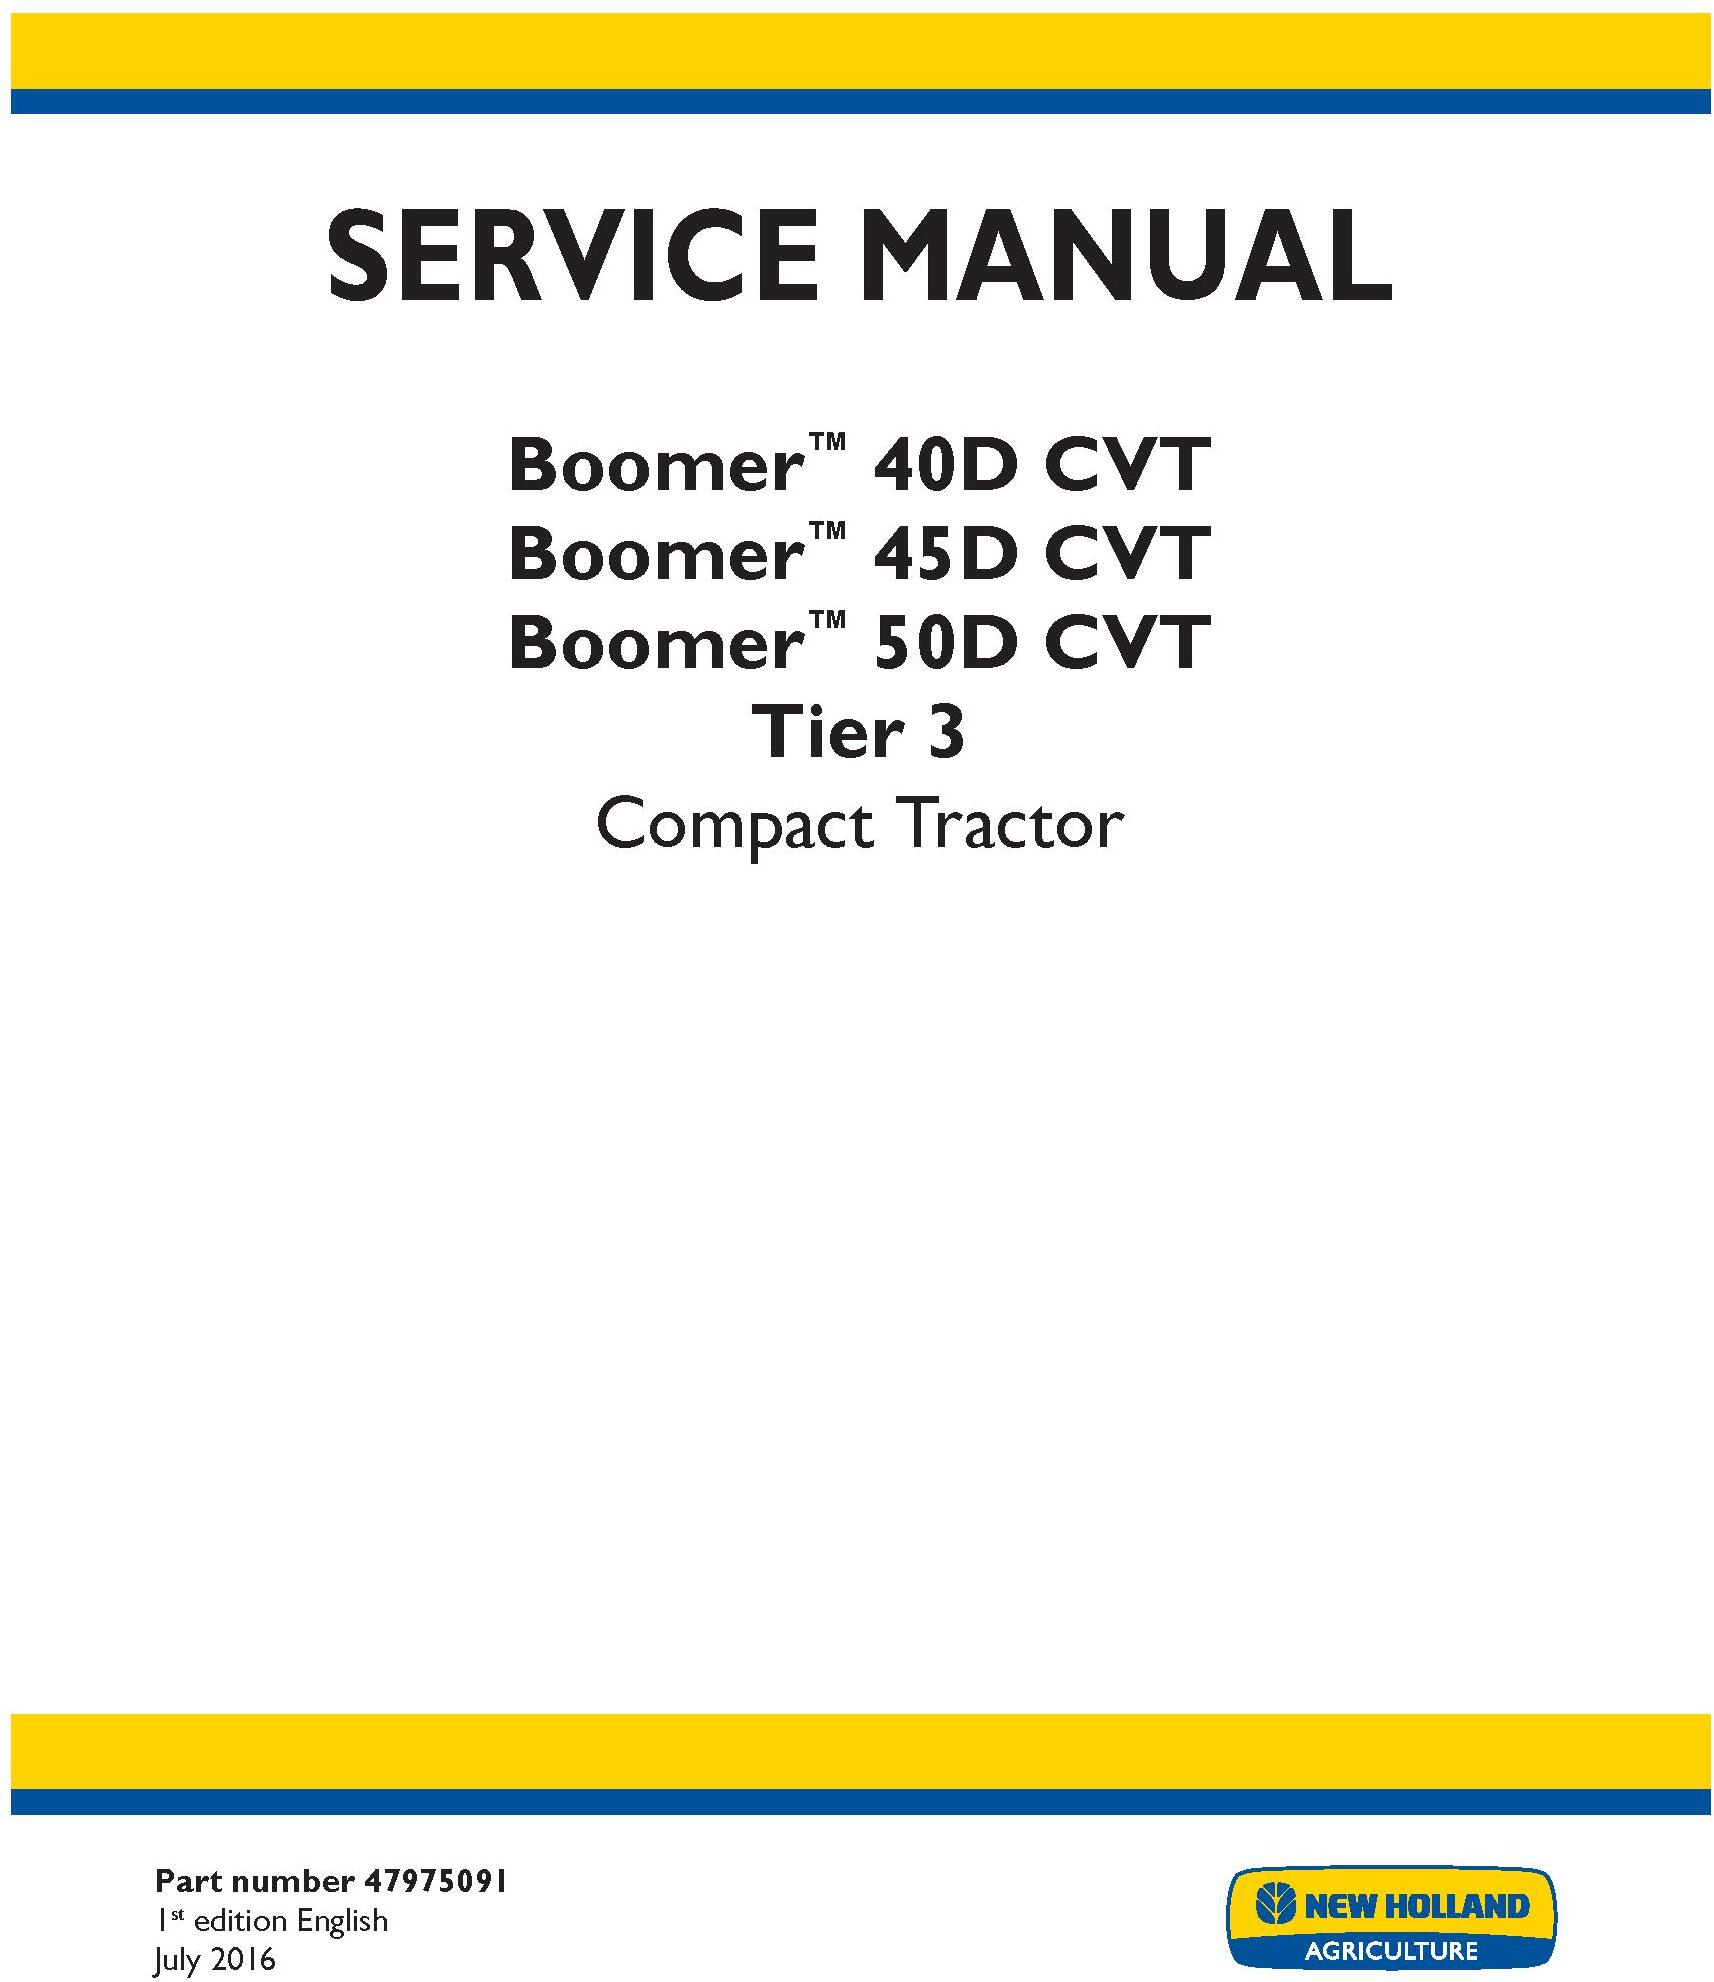 New Holland Boomer 40D CVT, 45D CVT, 50D CVT Tier 3 Compact Tractor Complete Service Manual